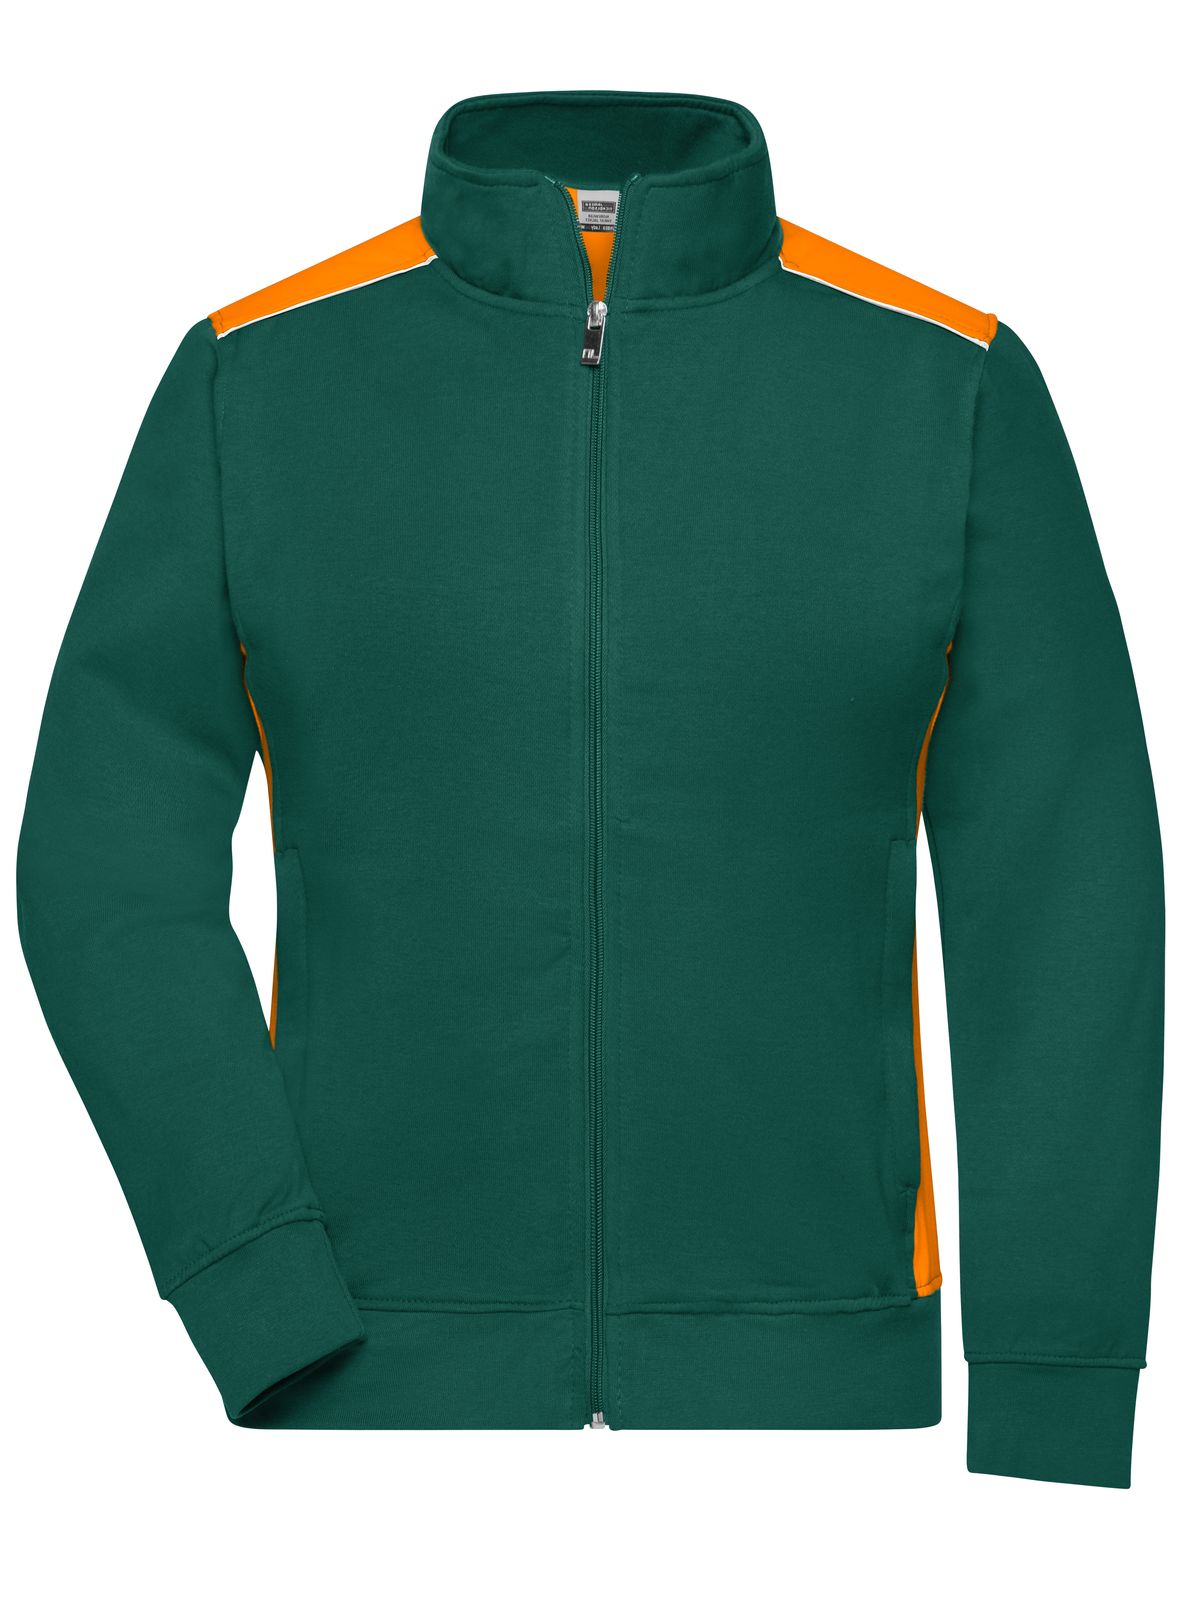 ladies-workwear-sweat-jacket-color-dark-green-orange.webp